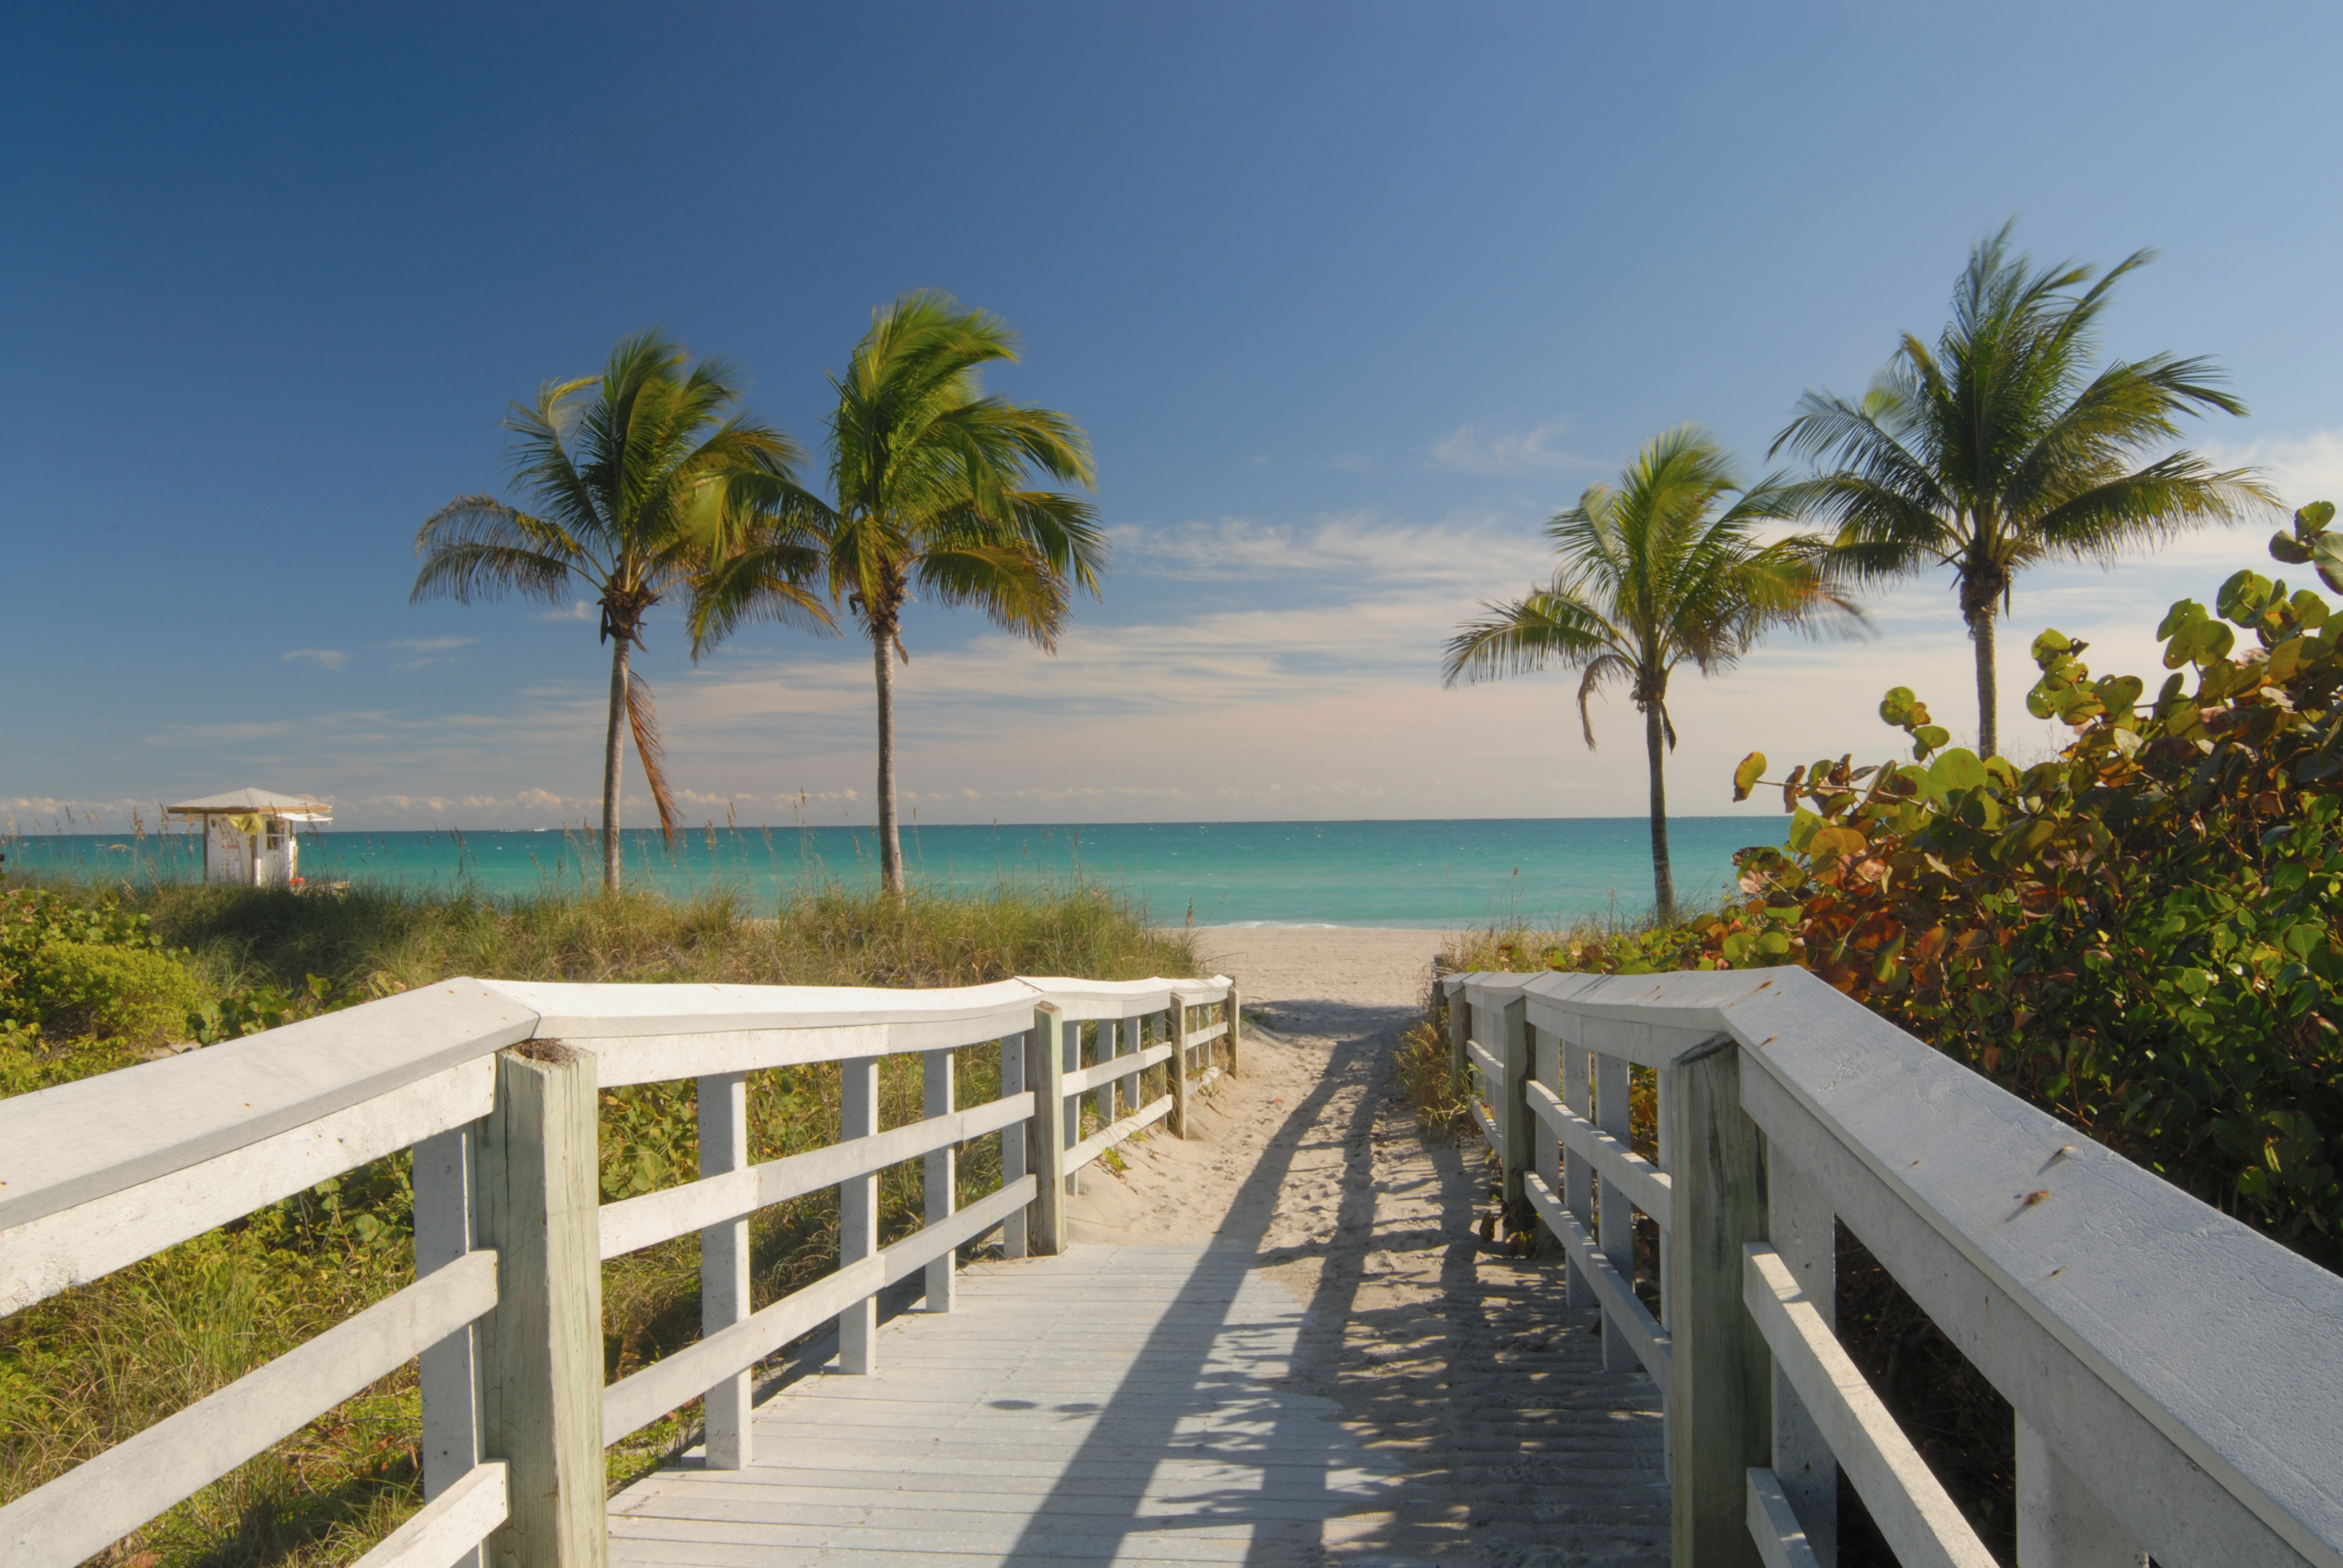 Boardwalk to a Florida beach, Treasure Island